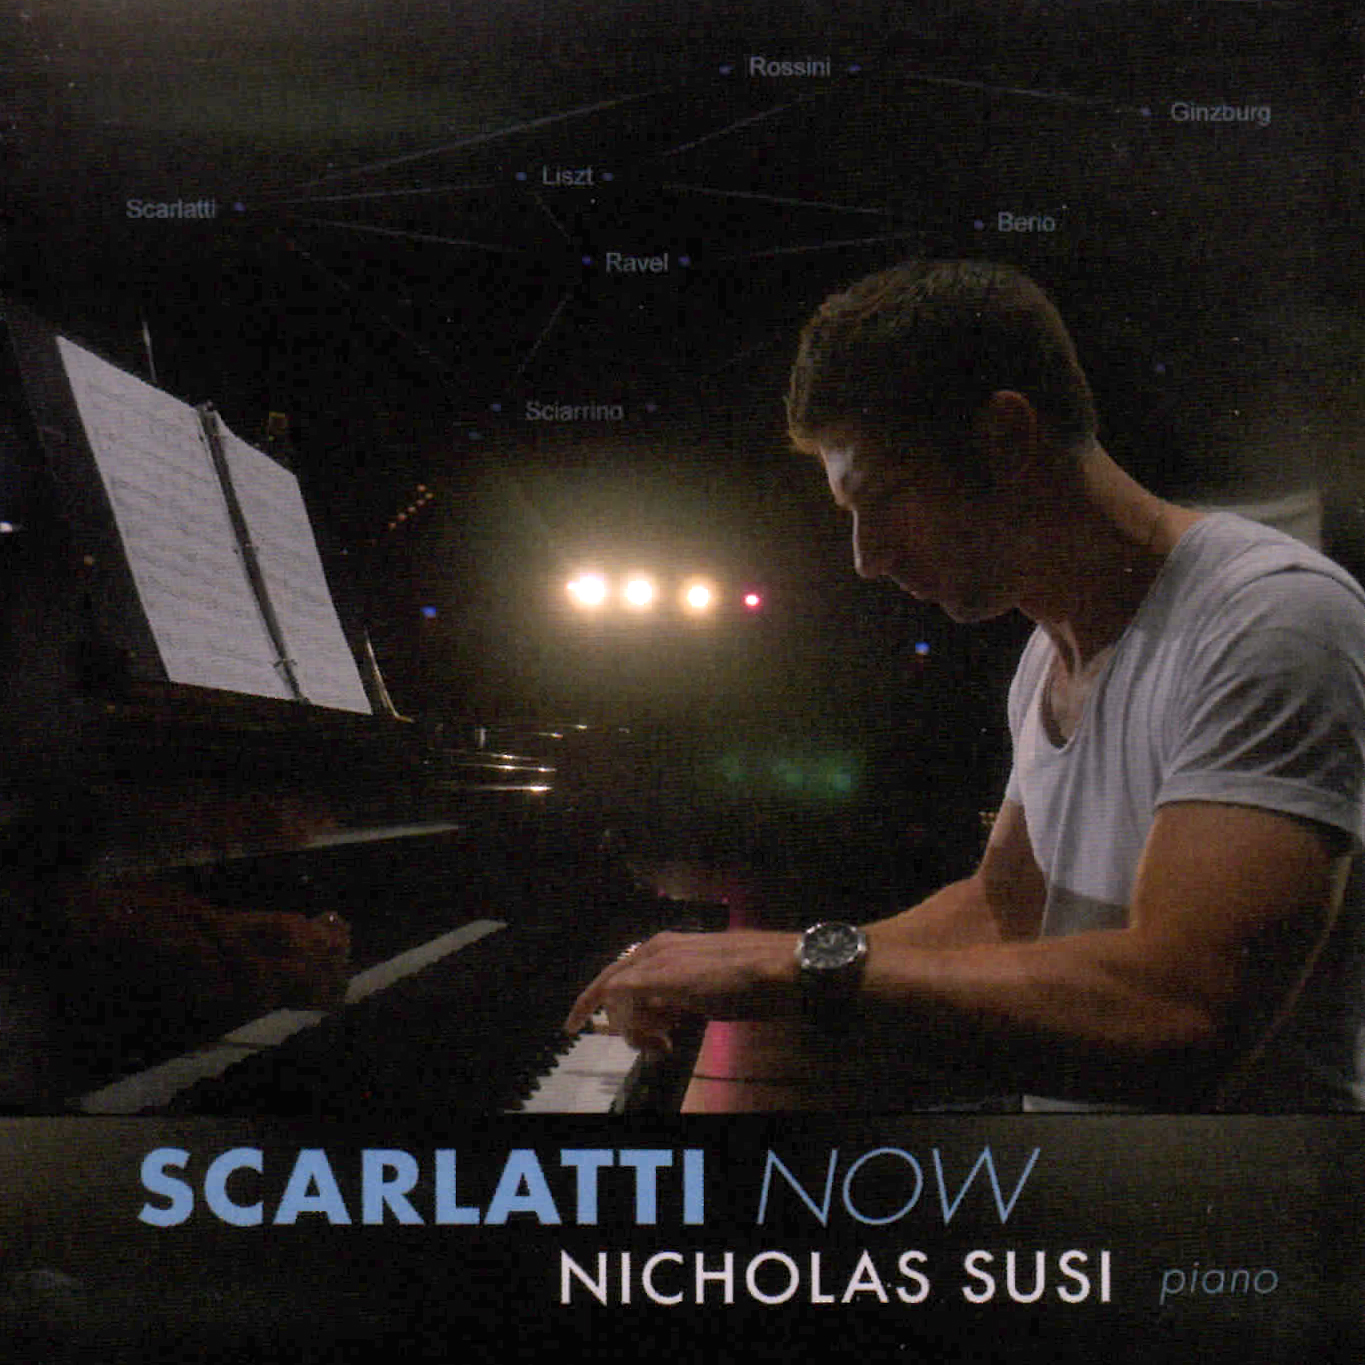 Scarlatti Now